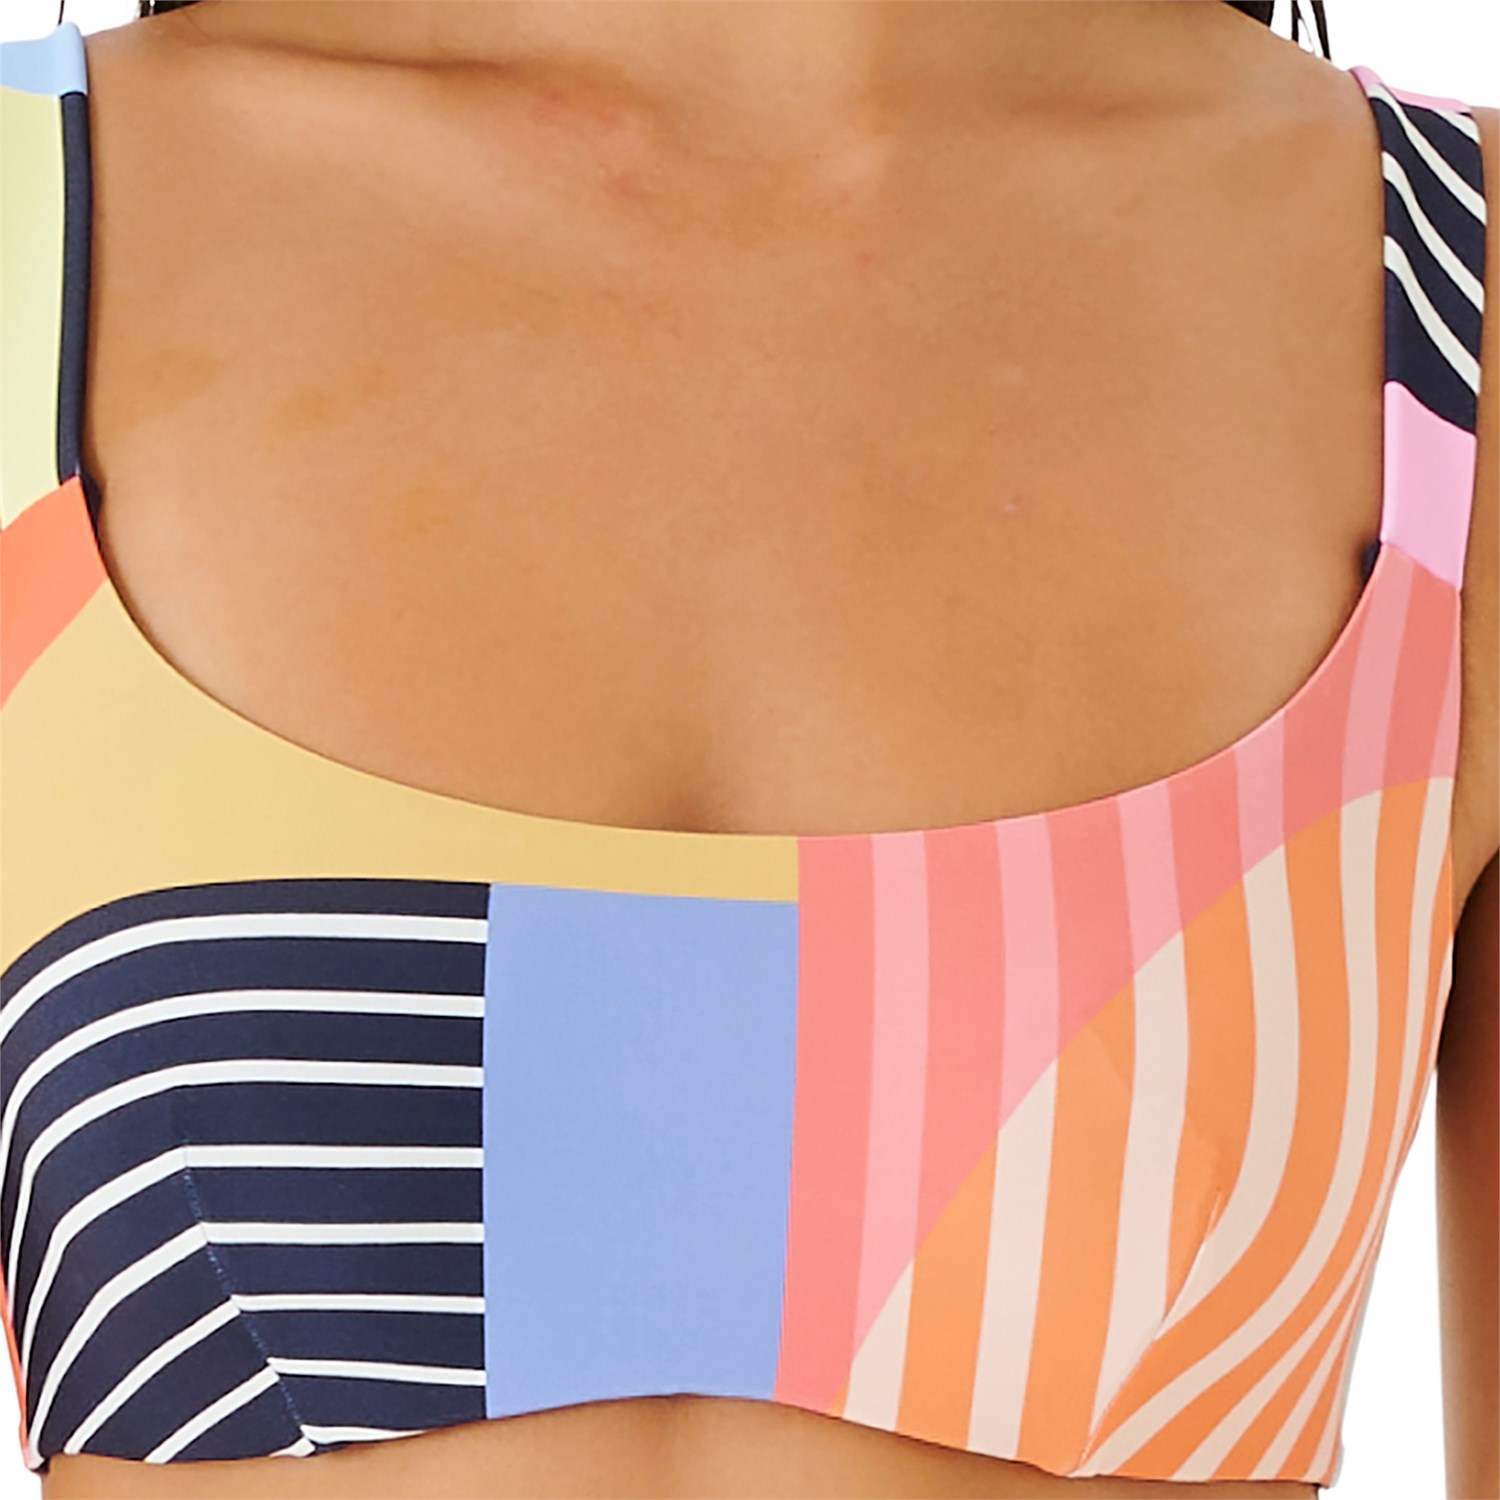 Brightside Bralette D-Cup Bikini Top (BRS0)